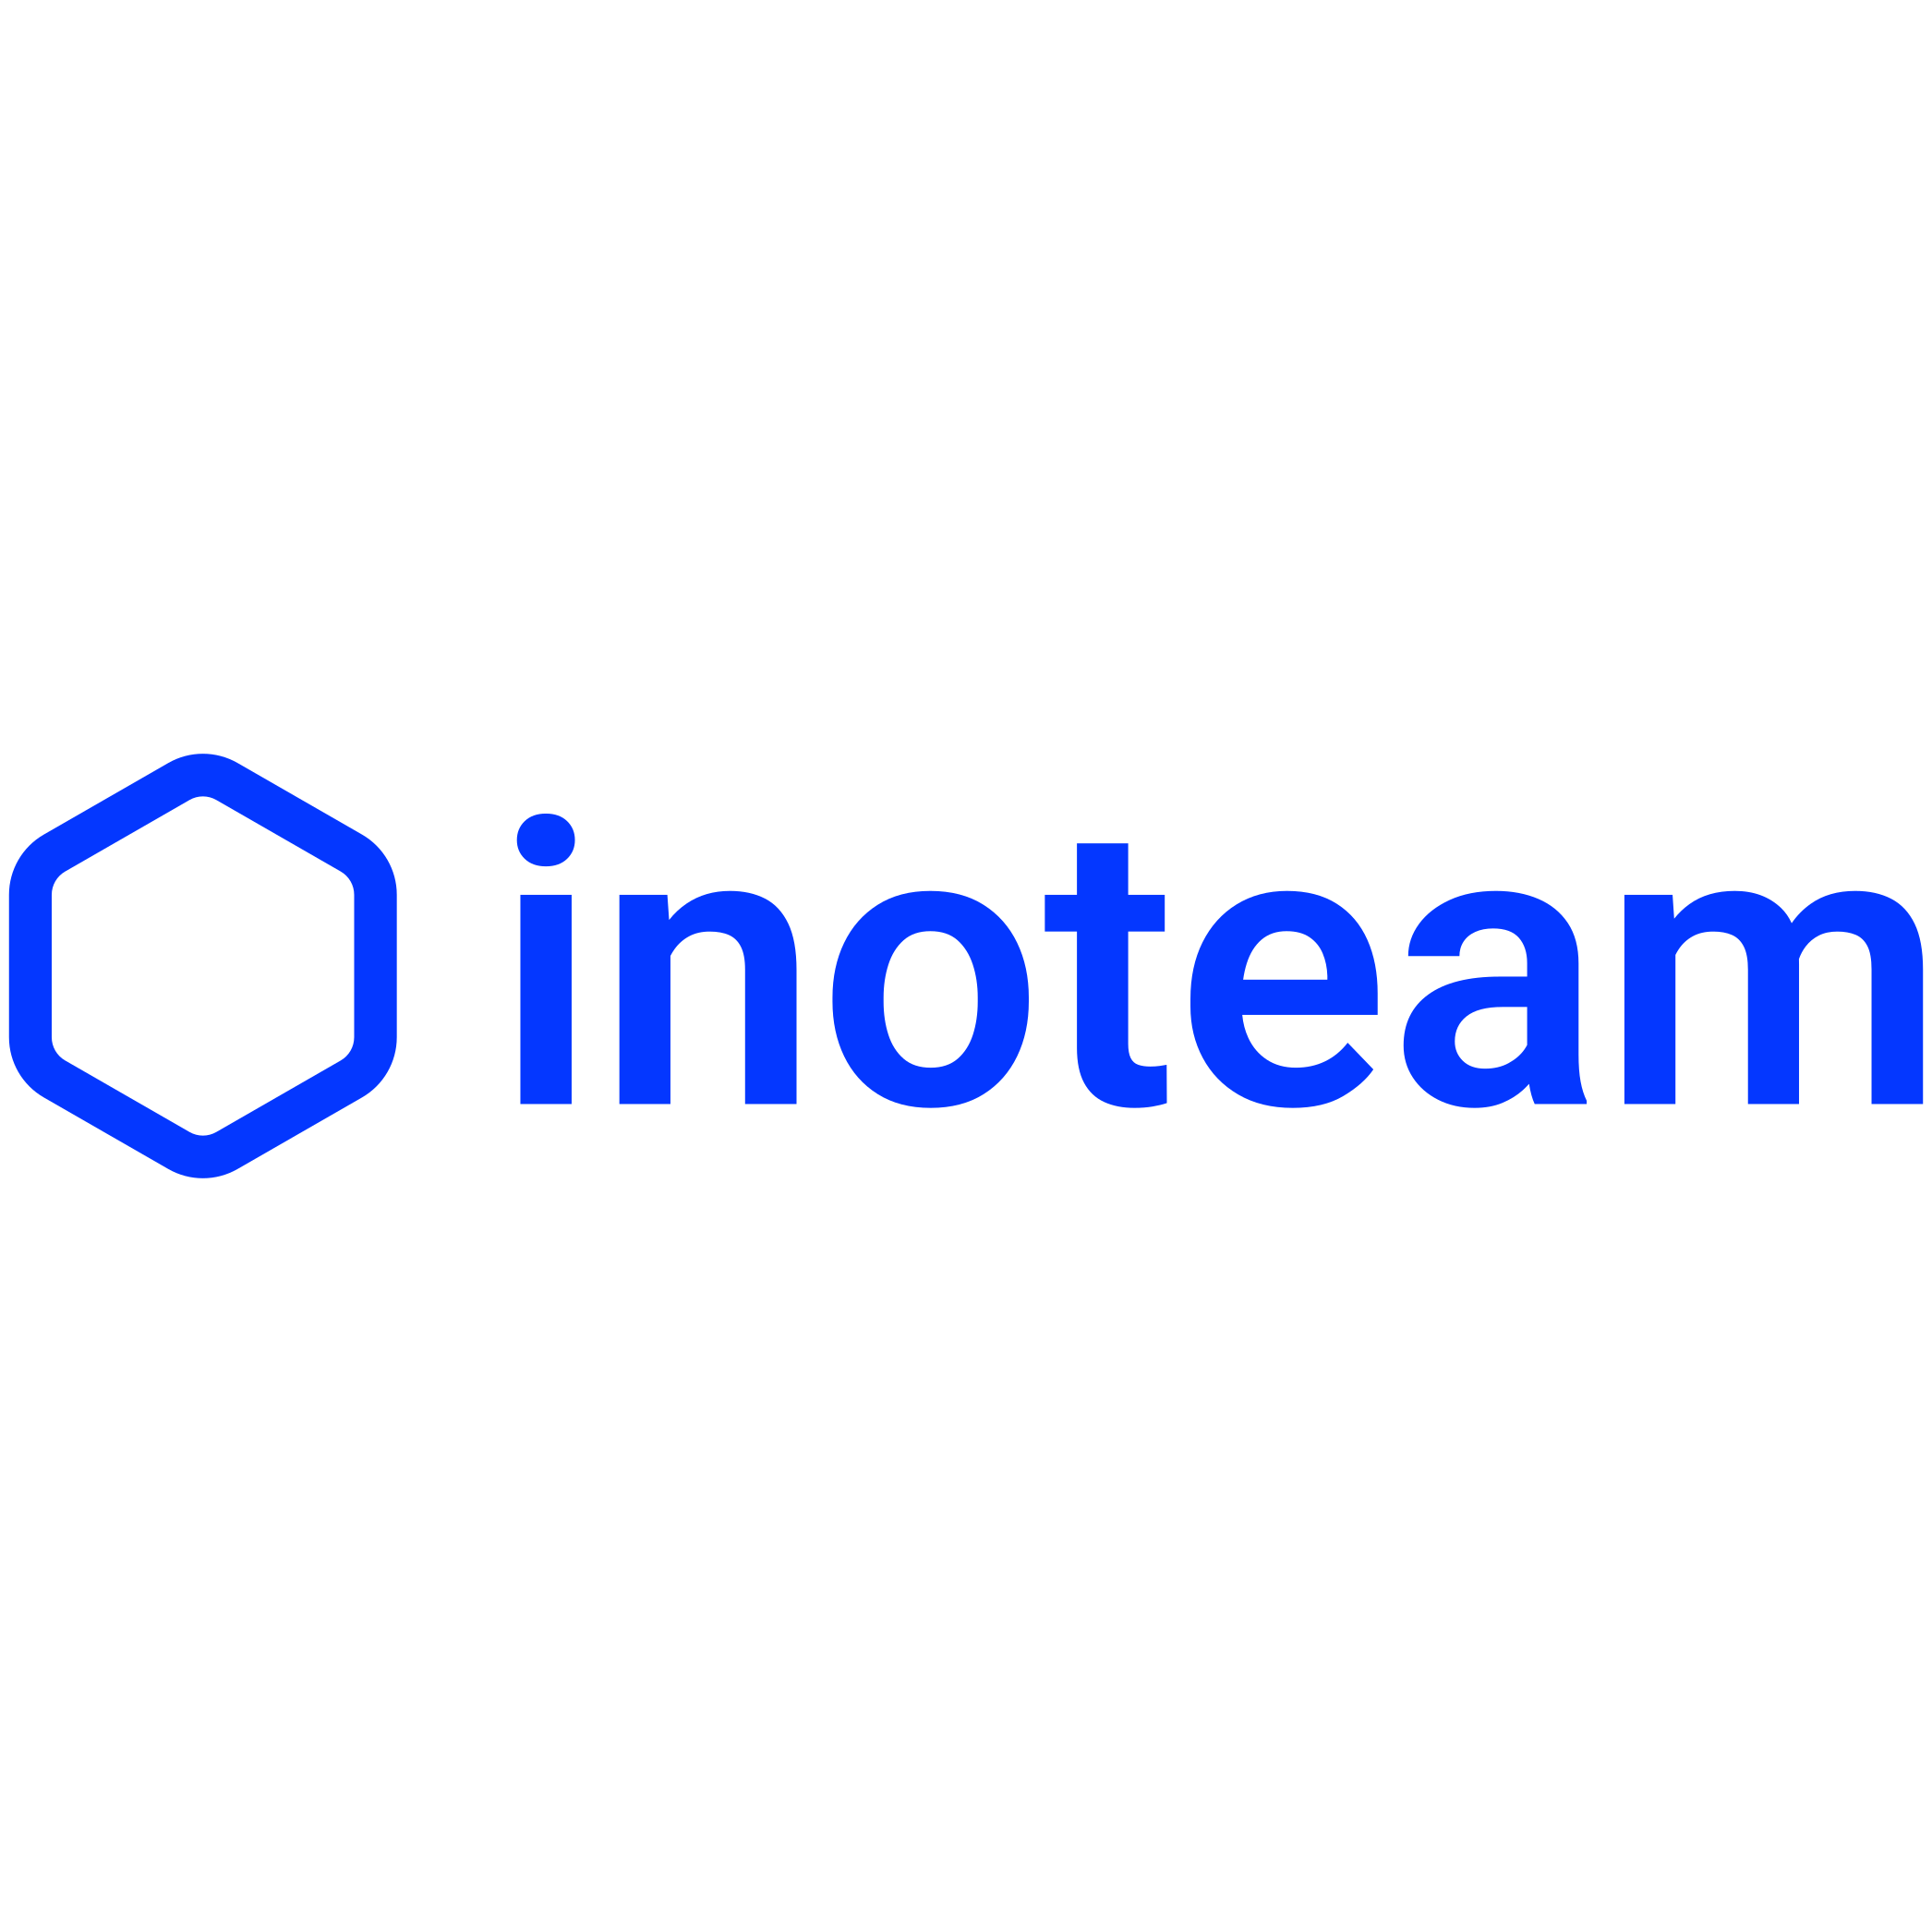 Inoteam Logo